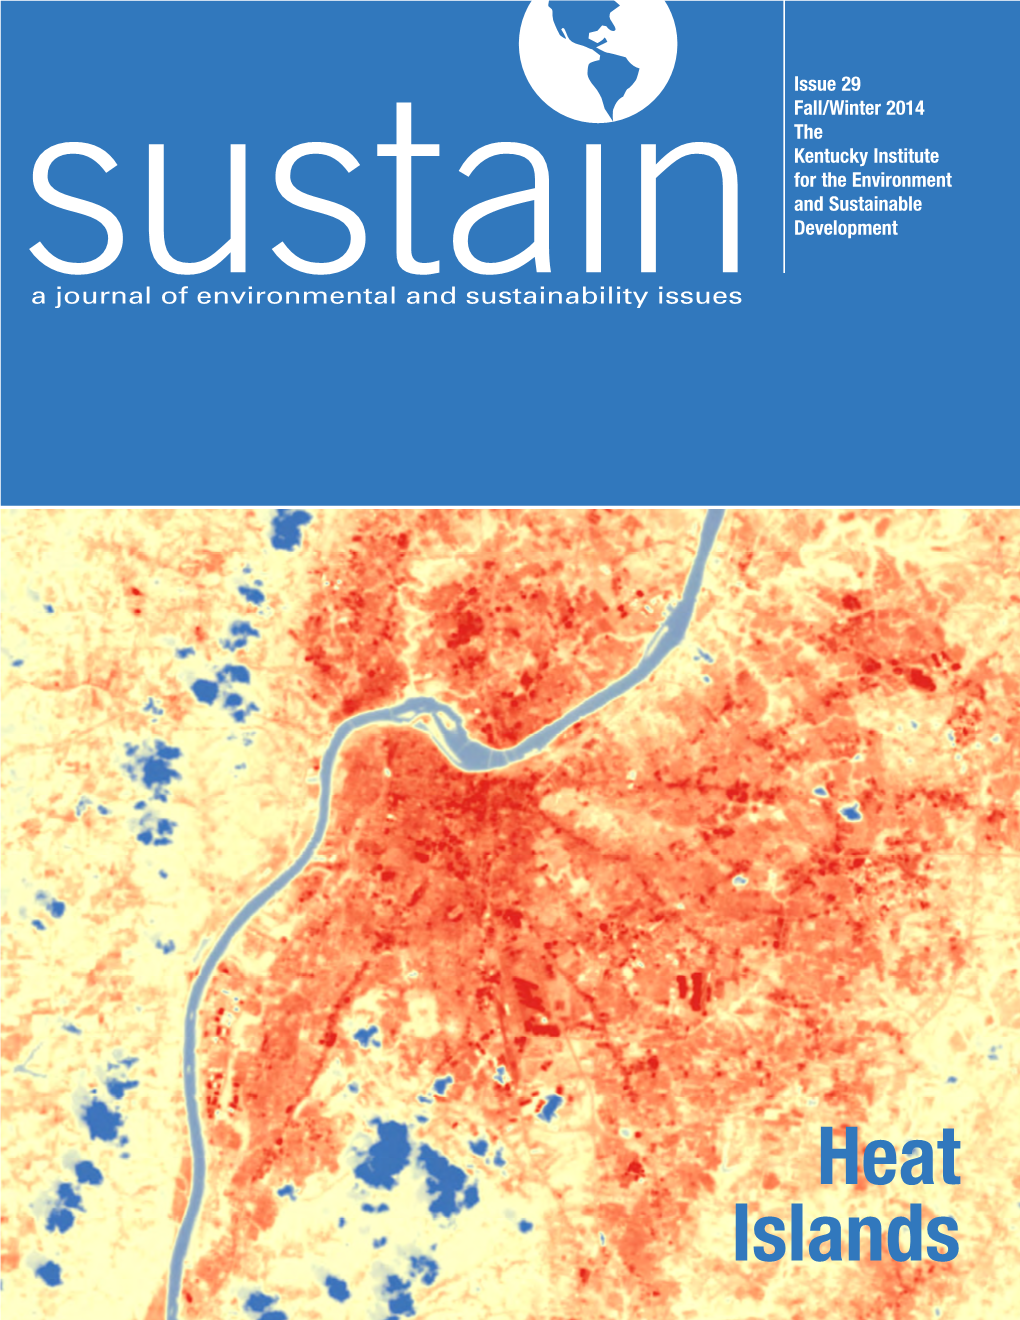 Heat Islands, Fall/Winter 2014, Issue 29